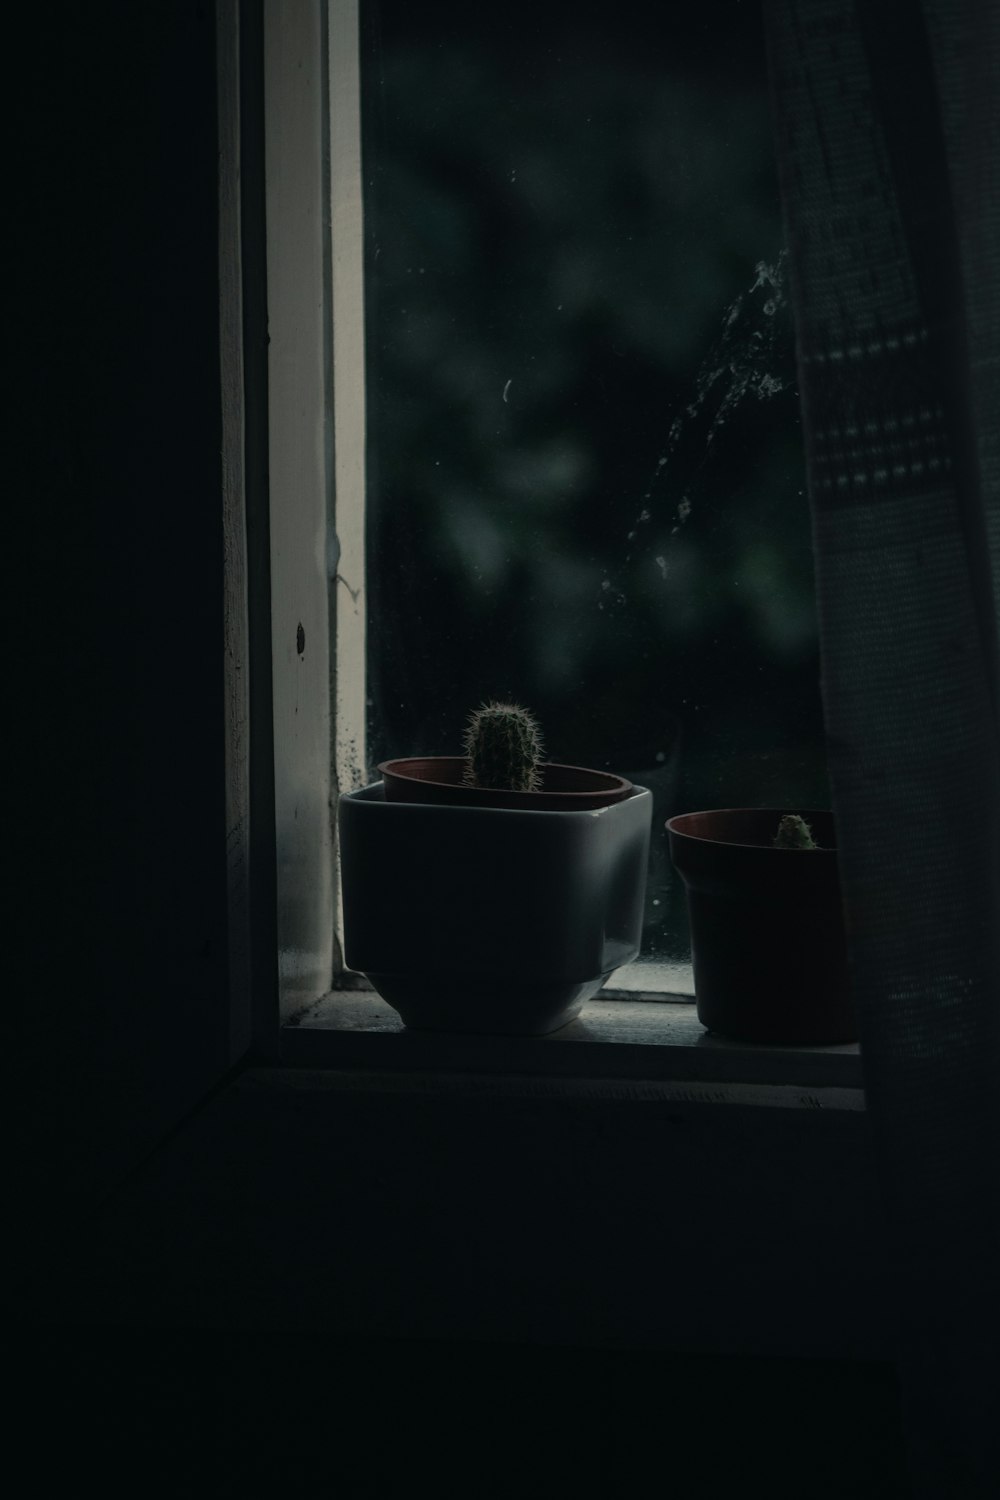 green cactus in white pot beside window